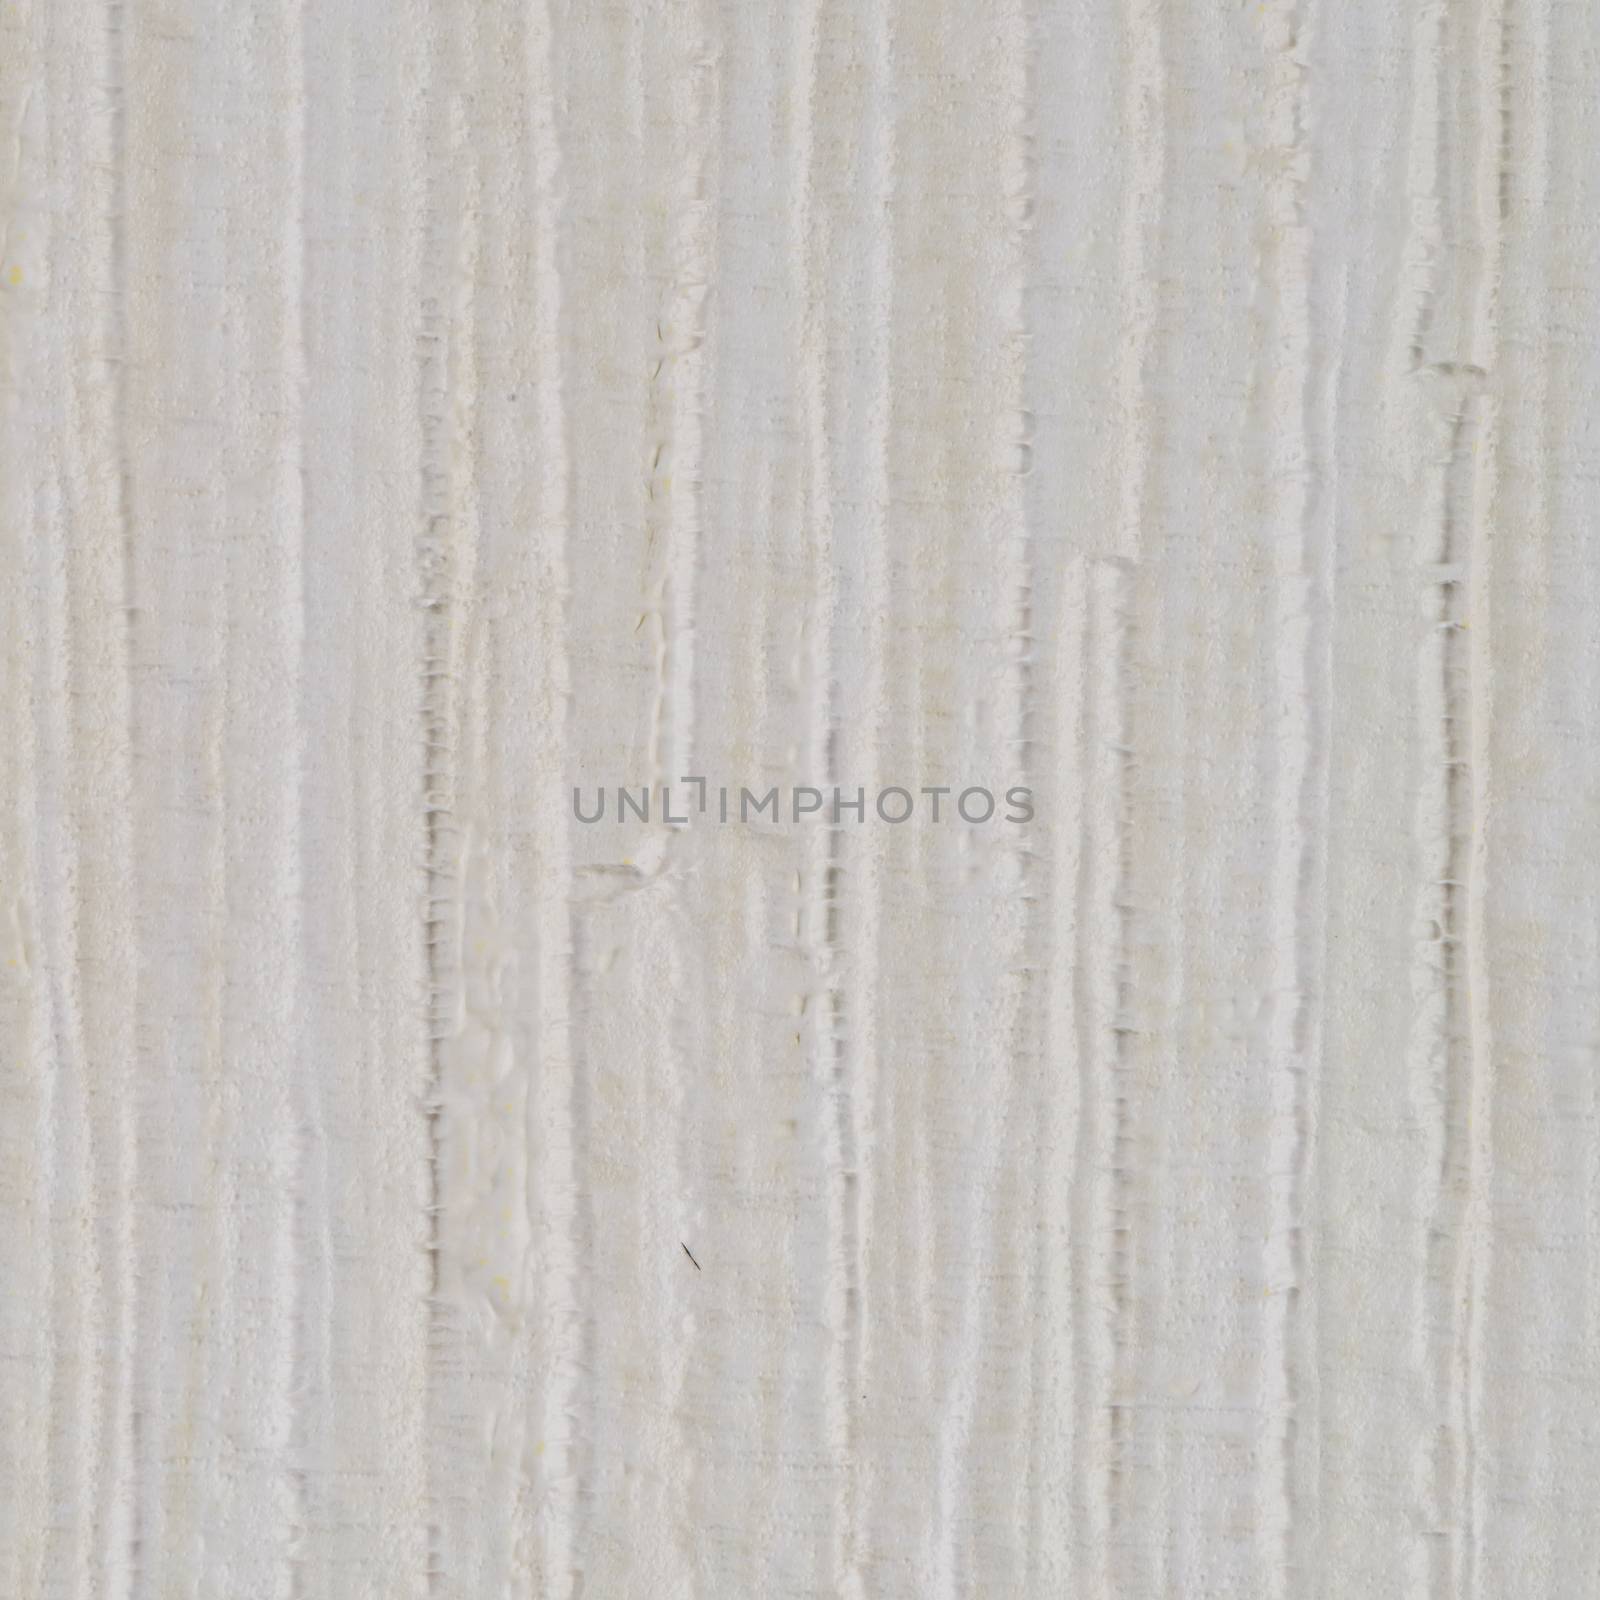 White vinyl texture by homydesign